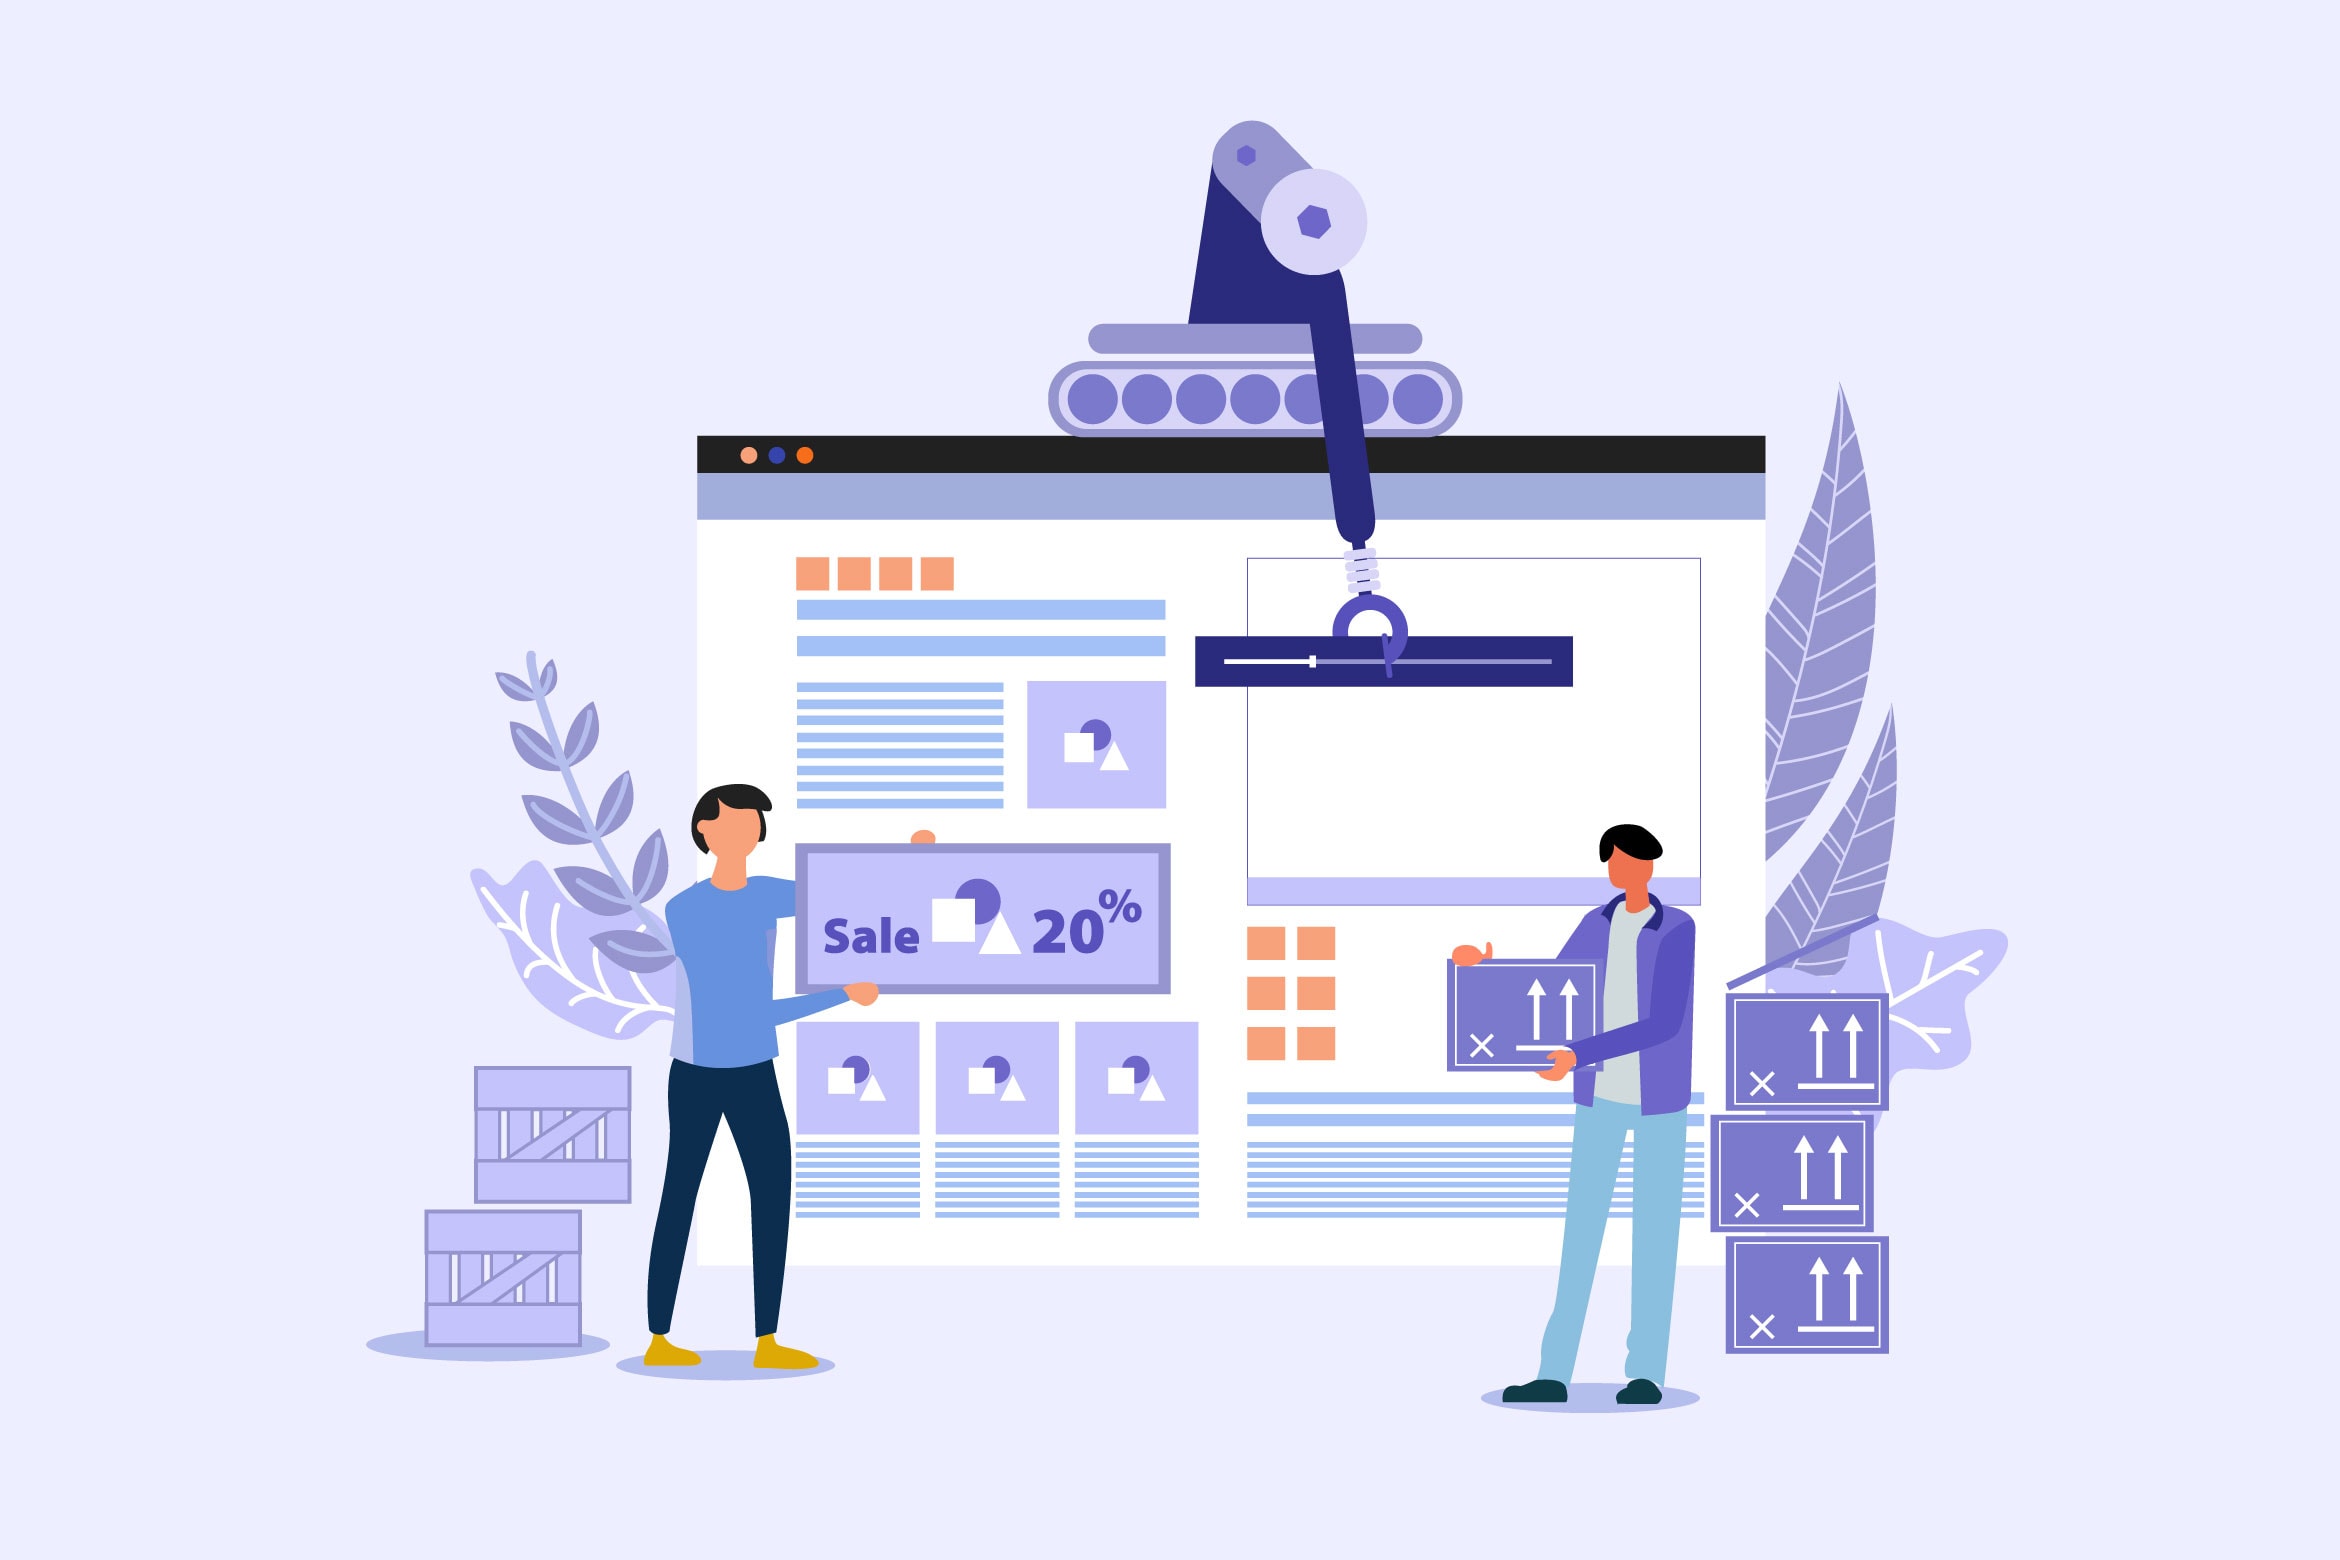 Cartoon image of people building a website